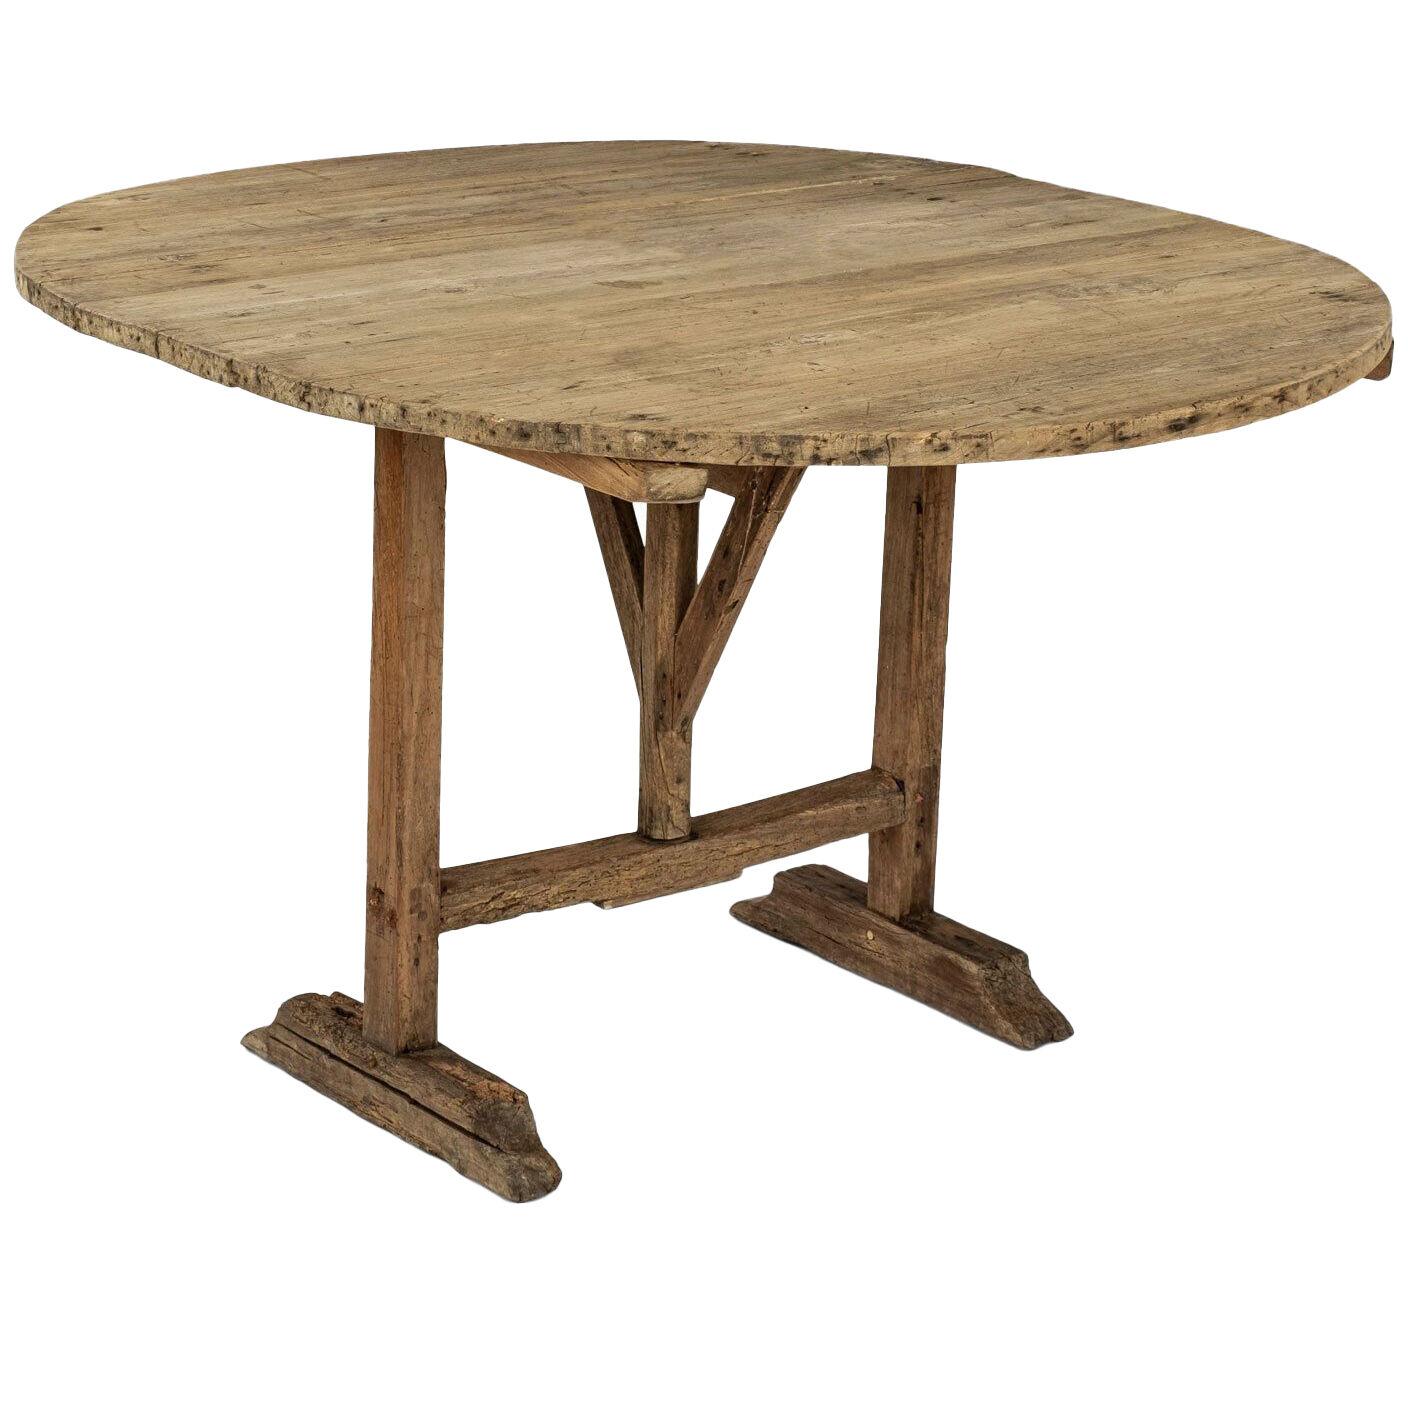 Rustic Early Oval-Shape Tilt-Top Table